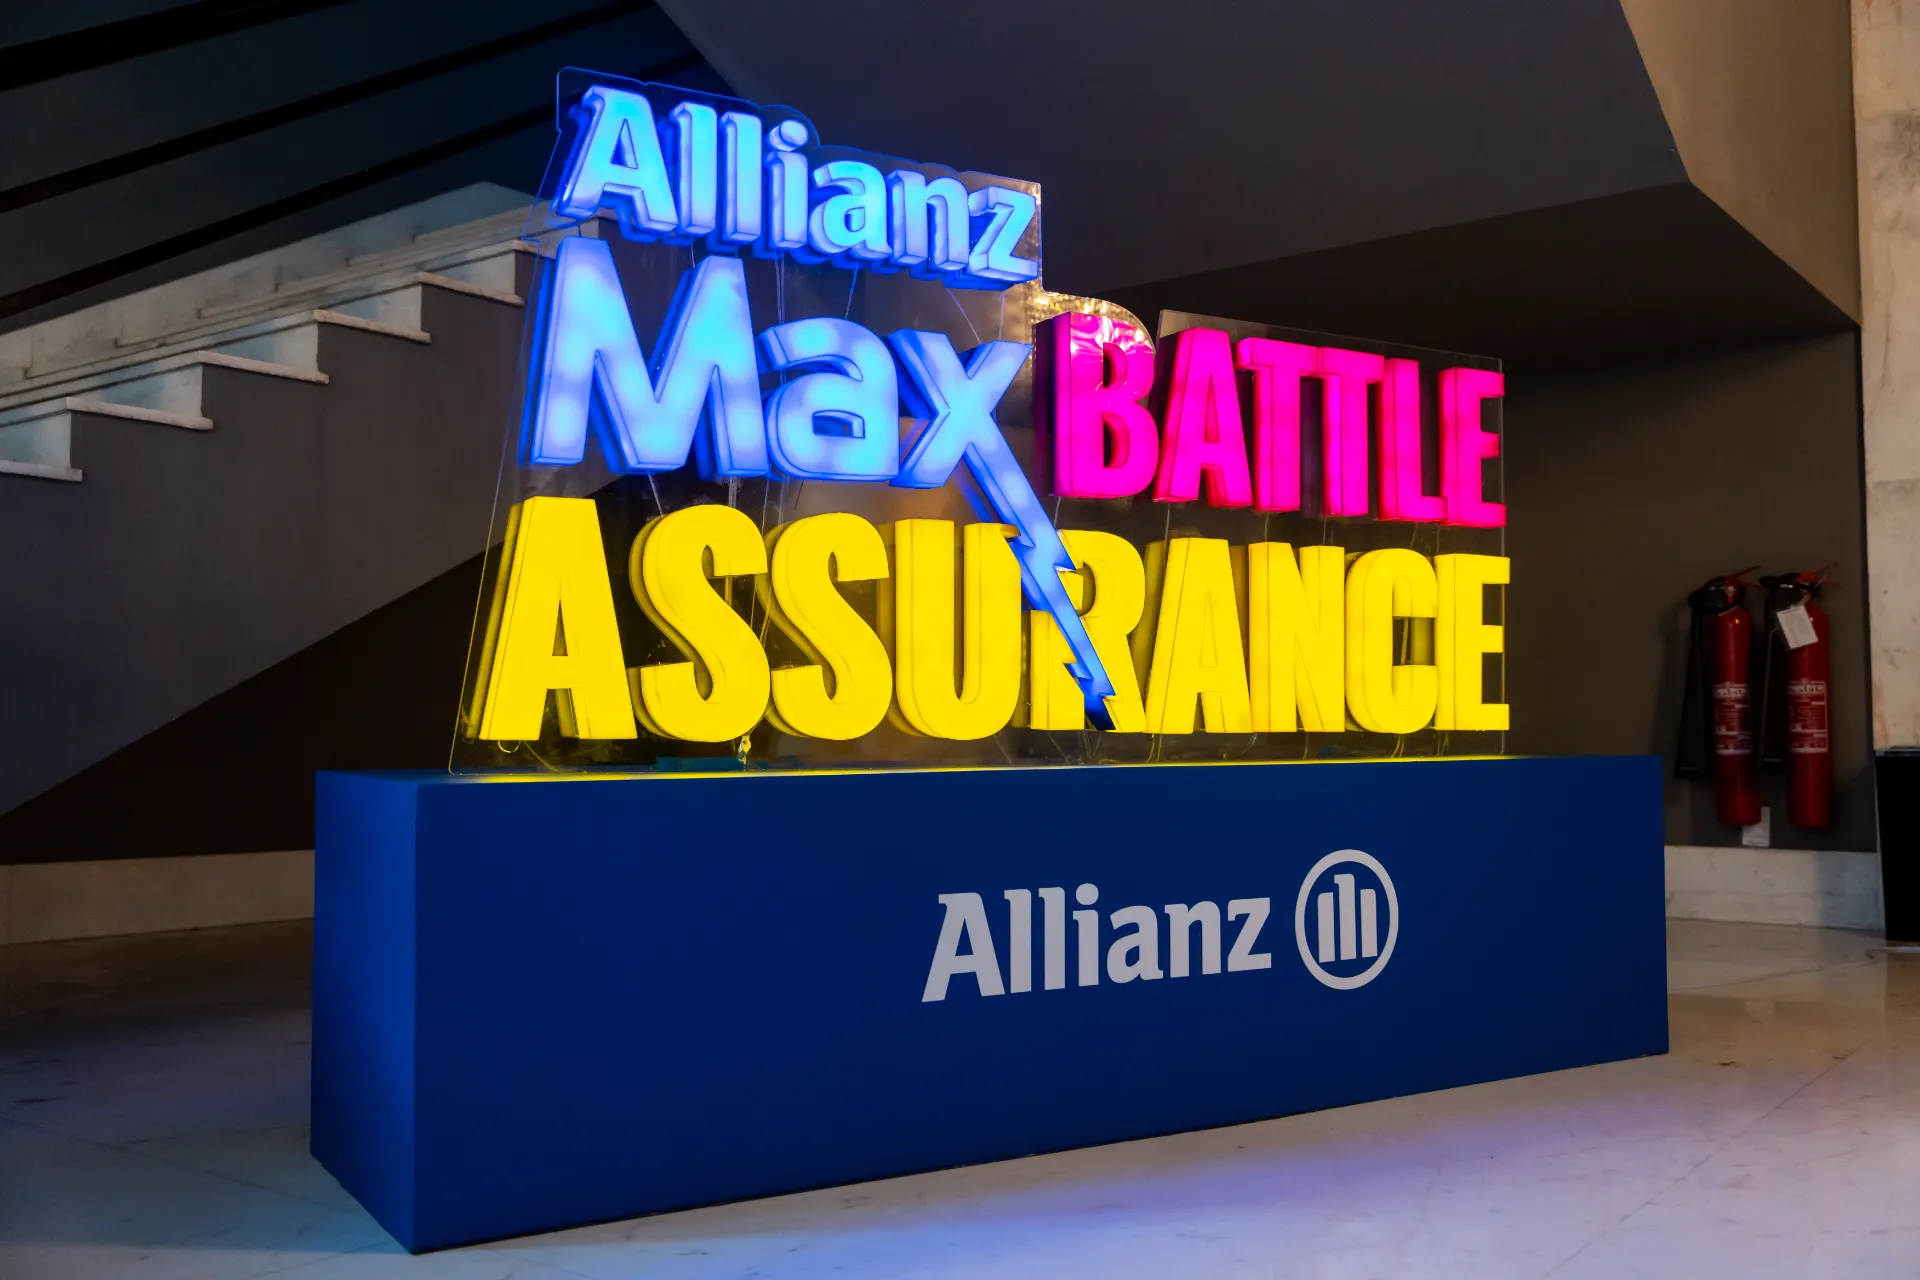 Allianz Max battle